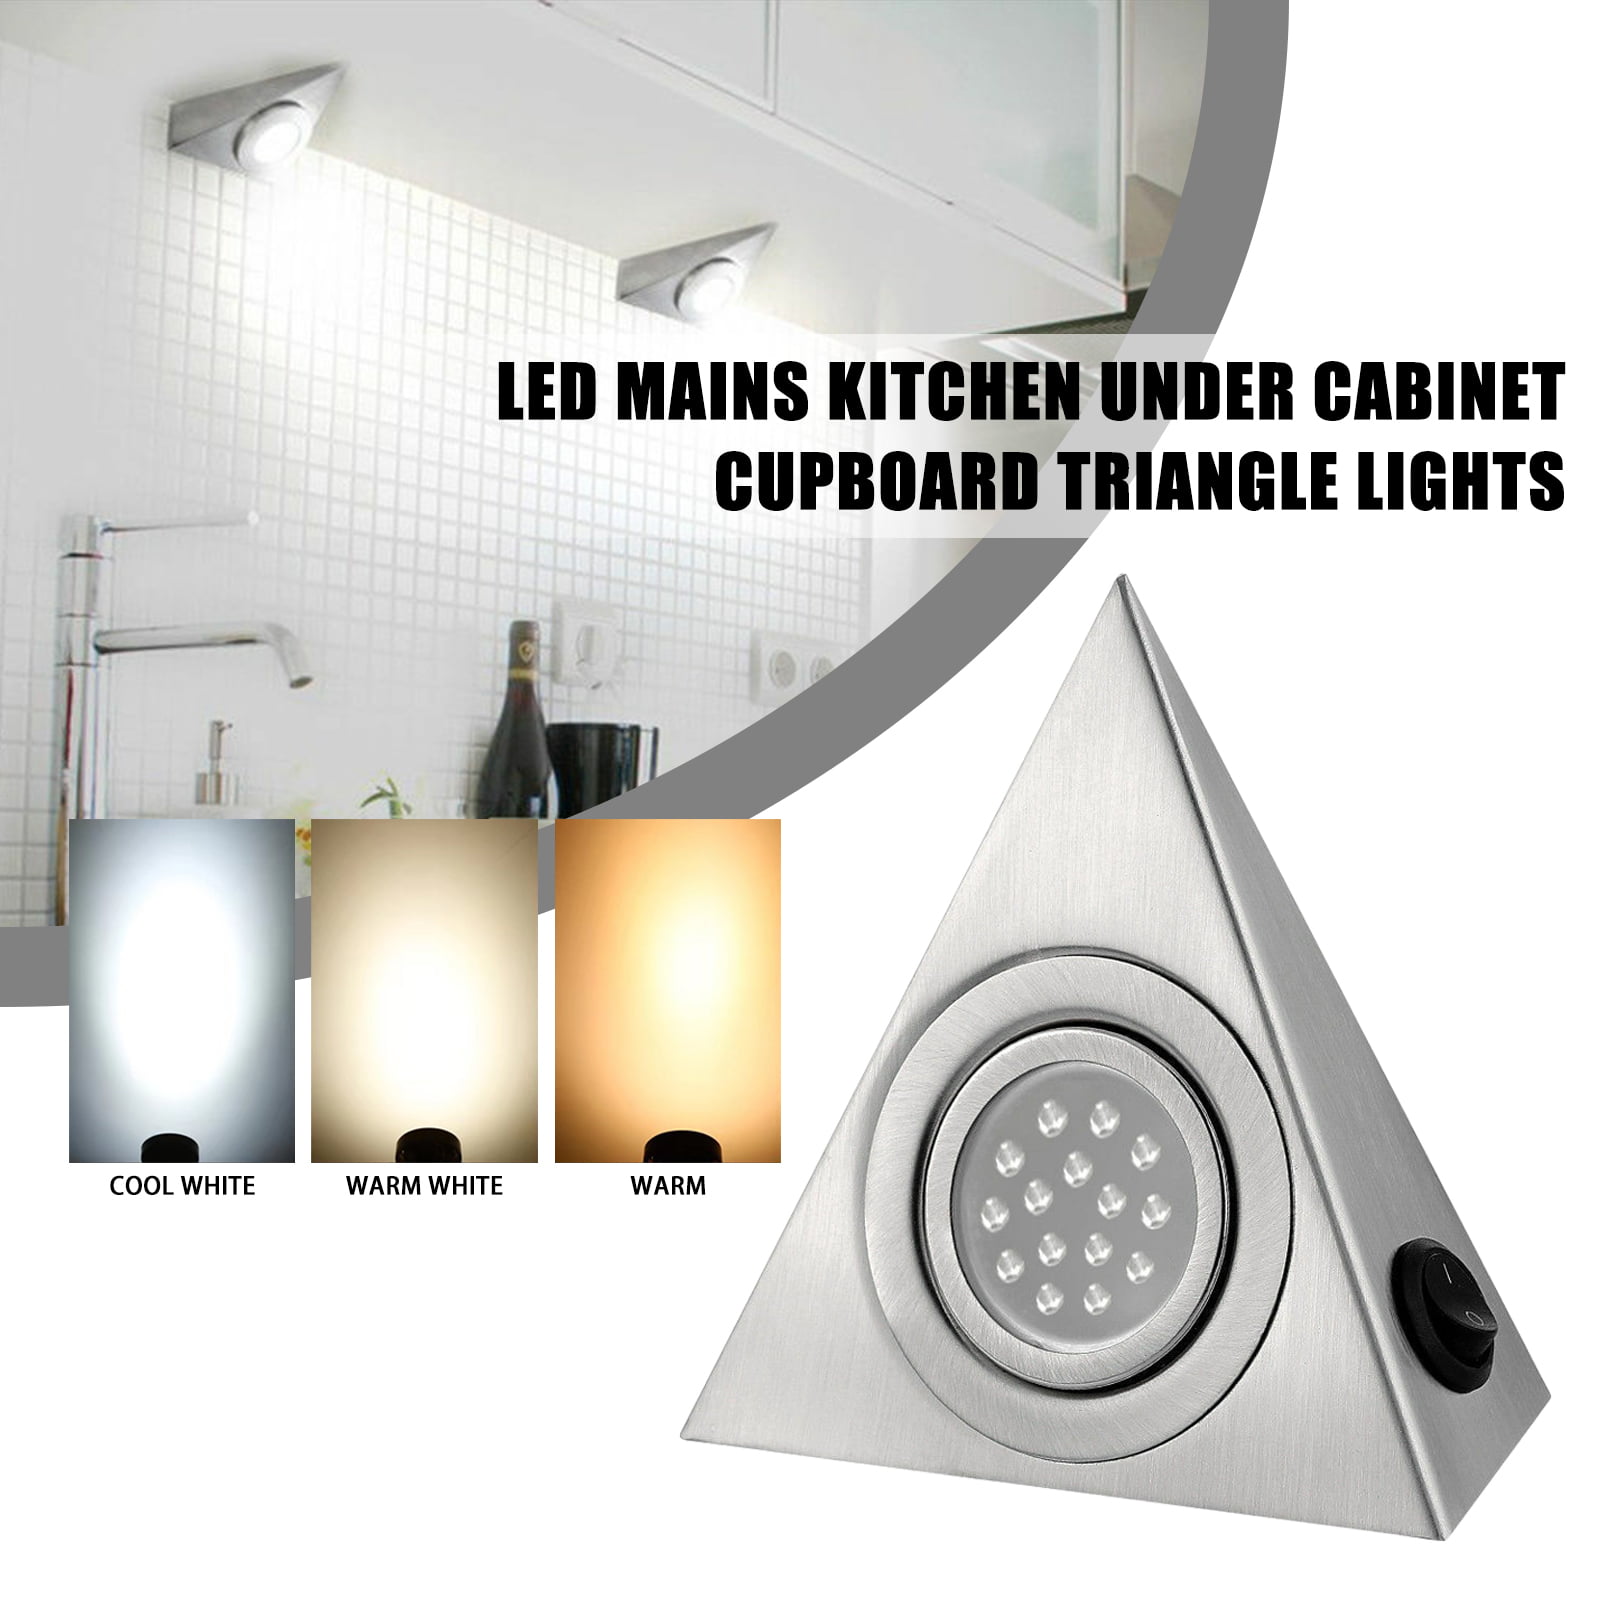 LED Mains Kitchen Under Cabinet Cupboard Triangle Light Kit Cool Warm White UK 